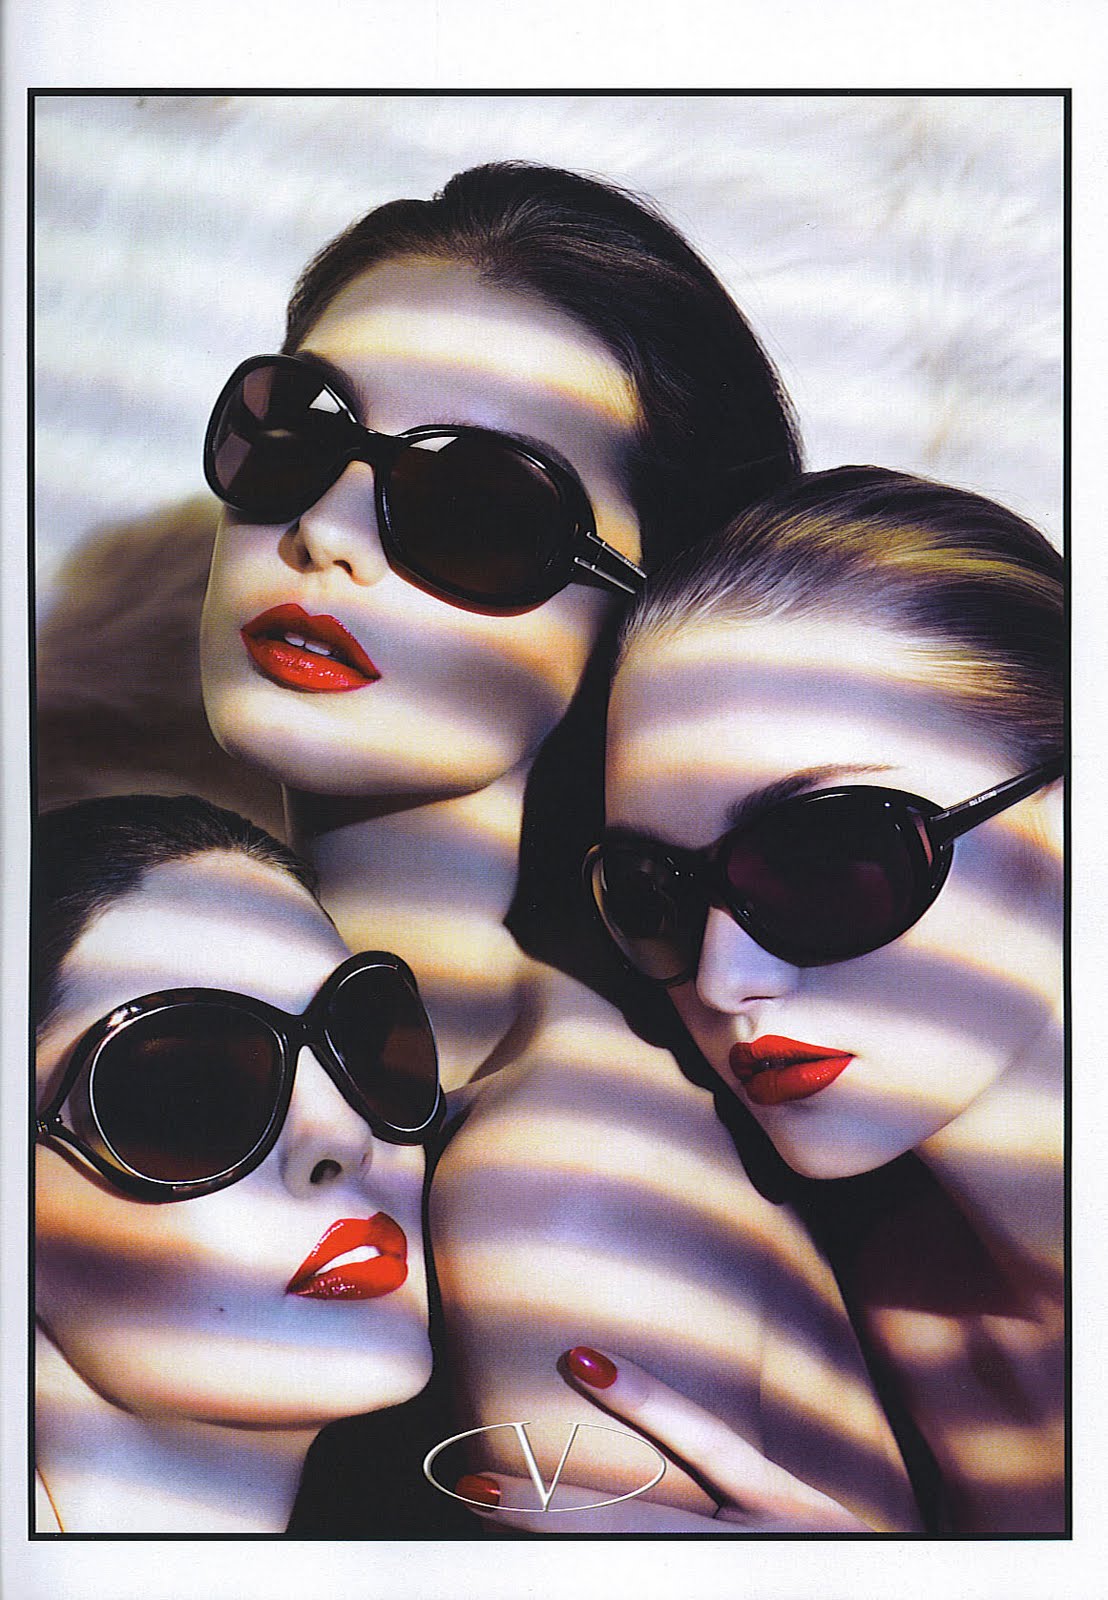 Ma Cherie, Dior: Louis Vuitton - Ad Campaign, F/W 2006-07 by Mert